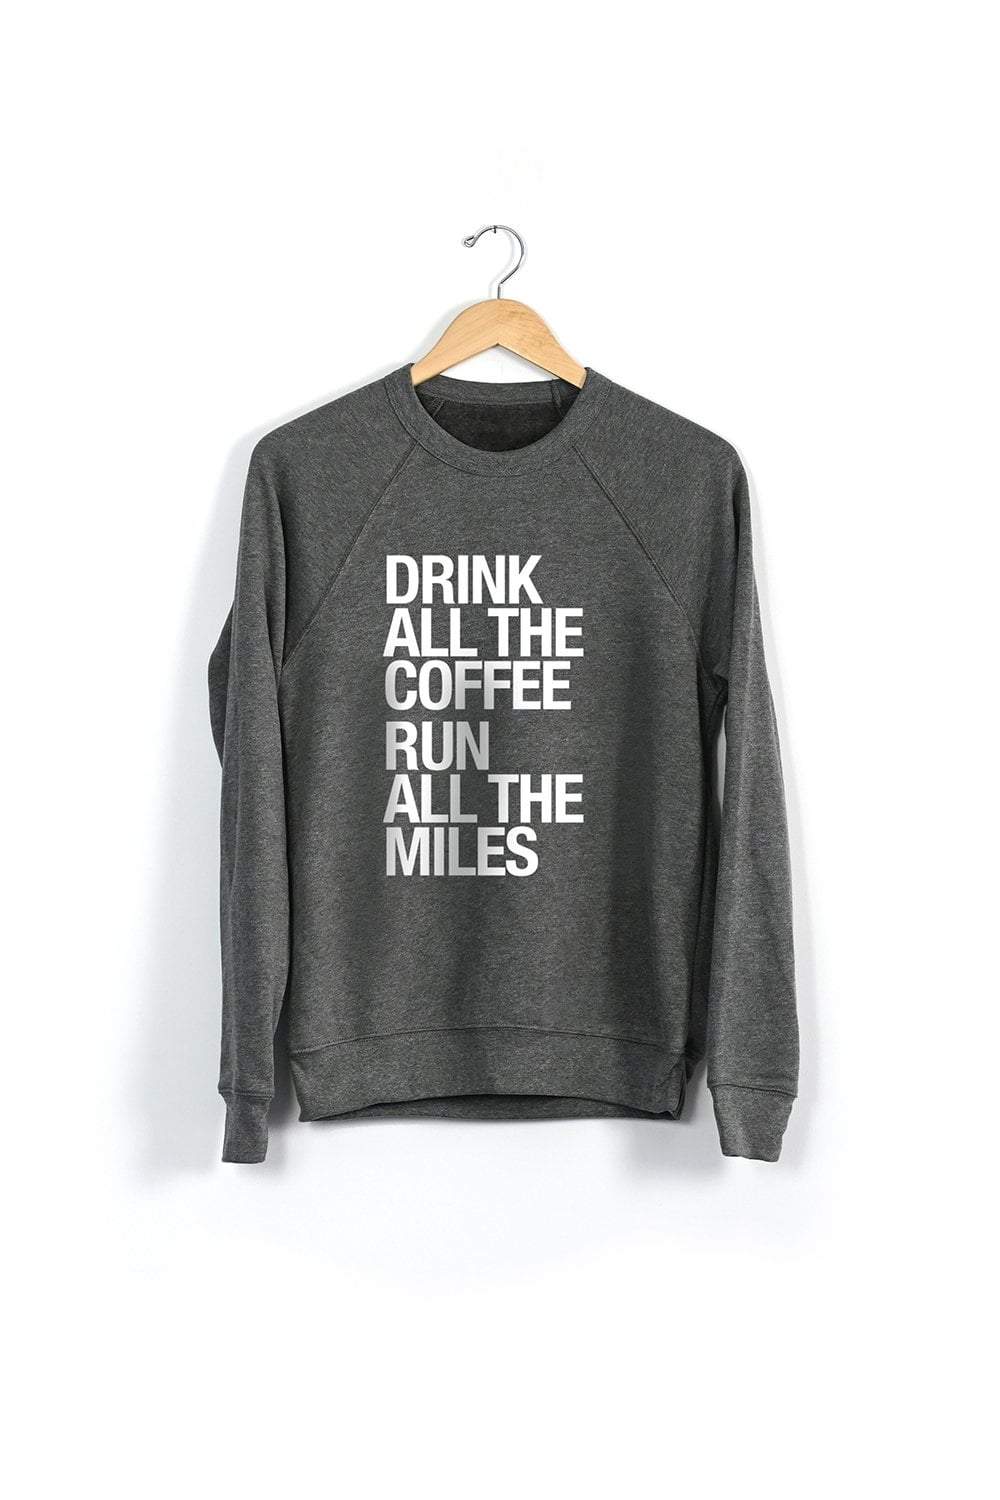 Sarah Marie Design Studio Sweatshirt XSmall / Grey Triblend Run All the Miles, Drink All the Coffee Sweatshirt